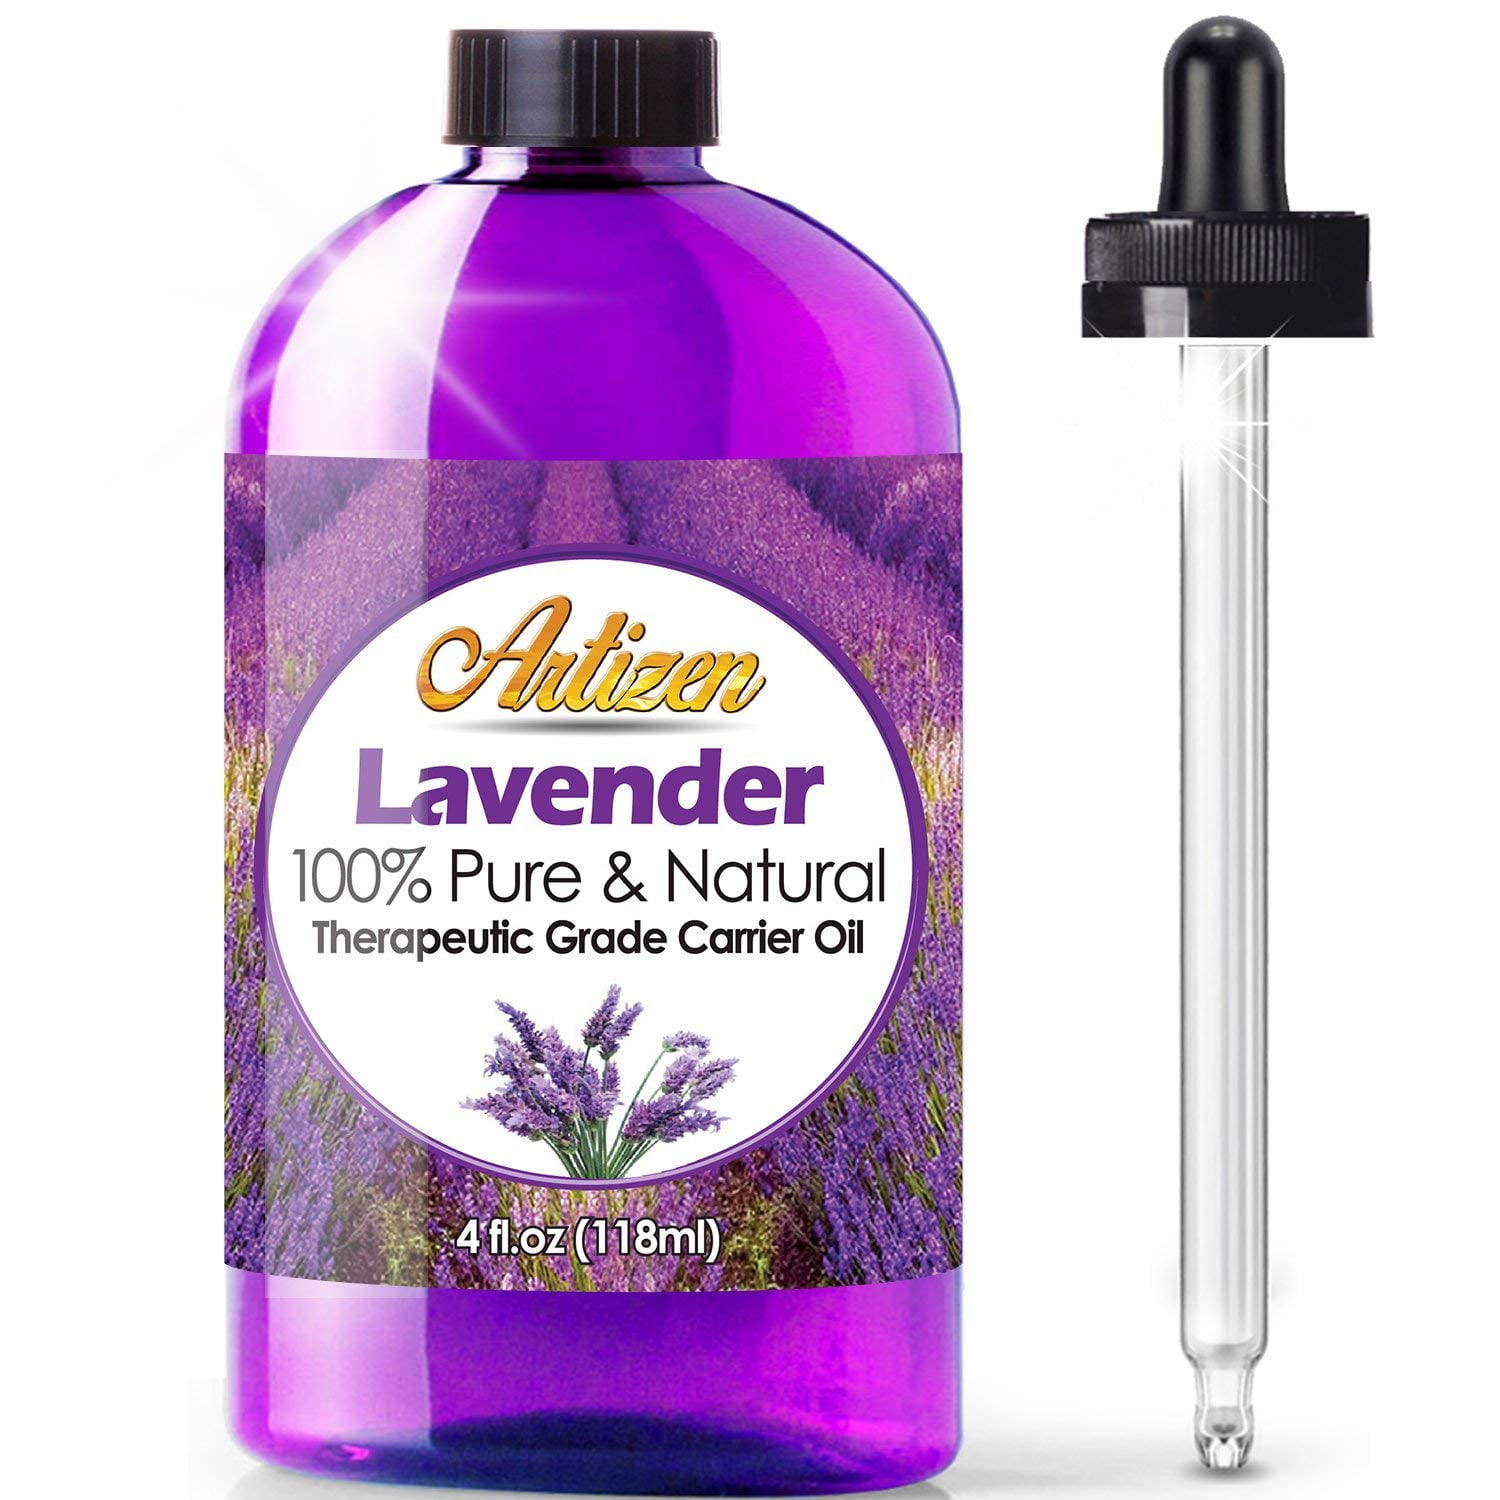 UpNature The Best Dutch Lavender Oil 4 oz - 100% Pure & Natural